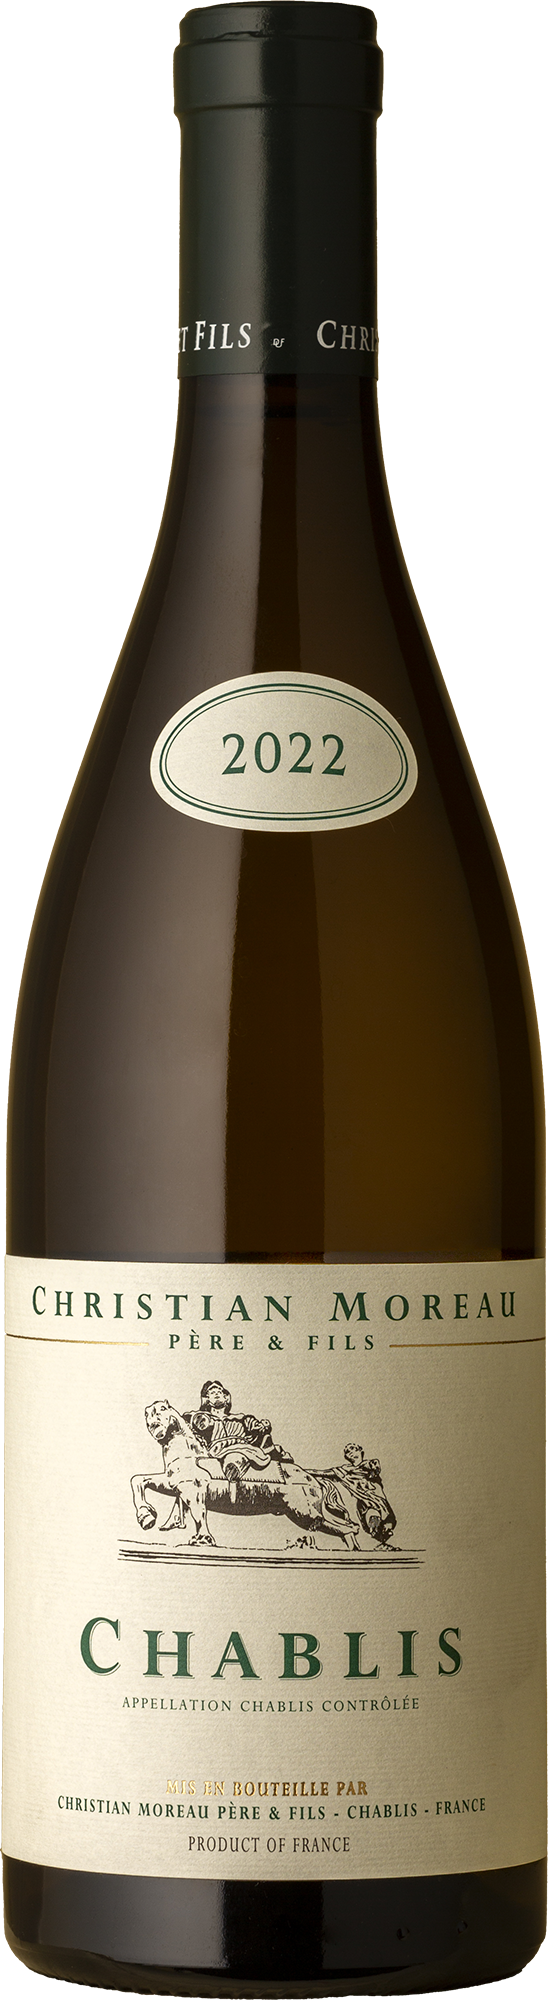 Christian Moreau - Chablis AC Chardonnay 2022 White Wine